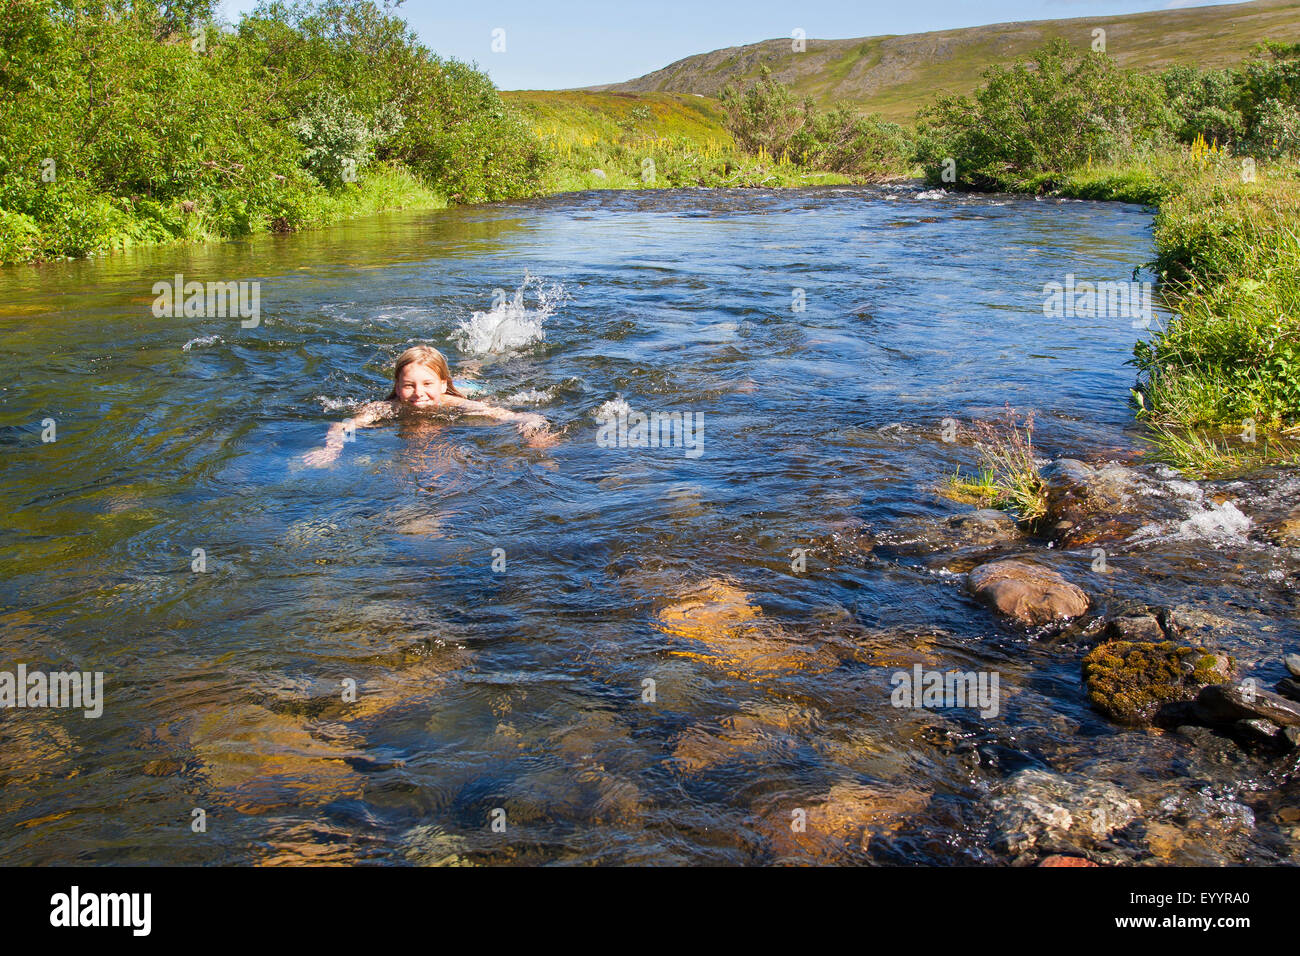 girl bathing in a creek, Germany Stock Photo